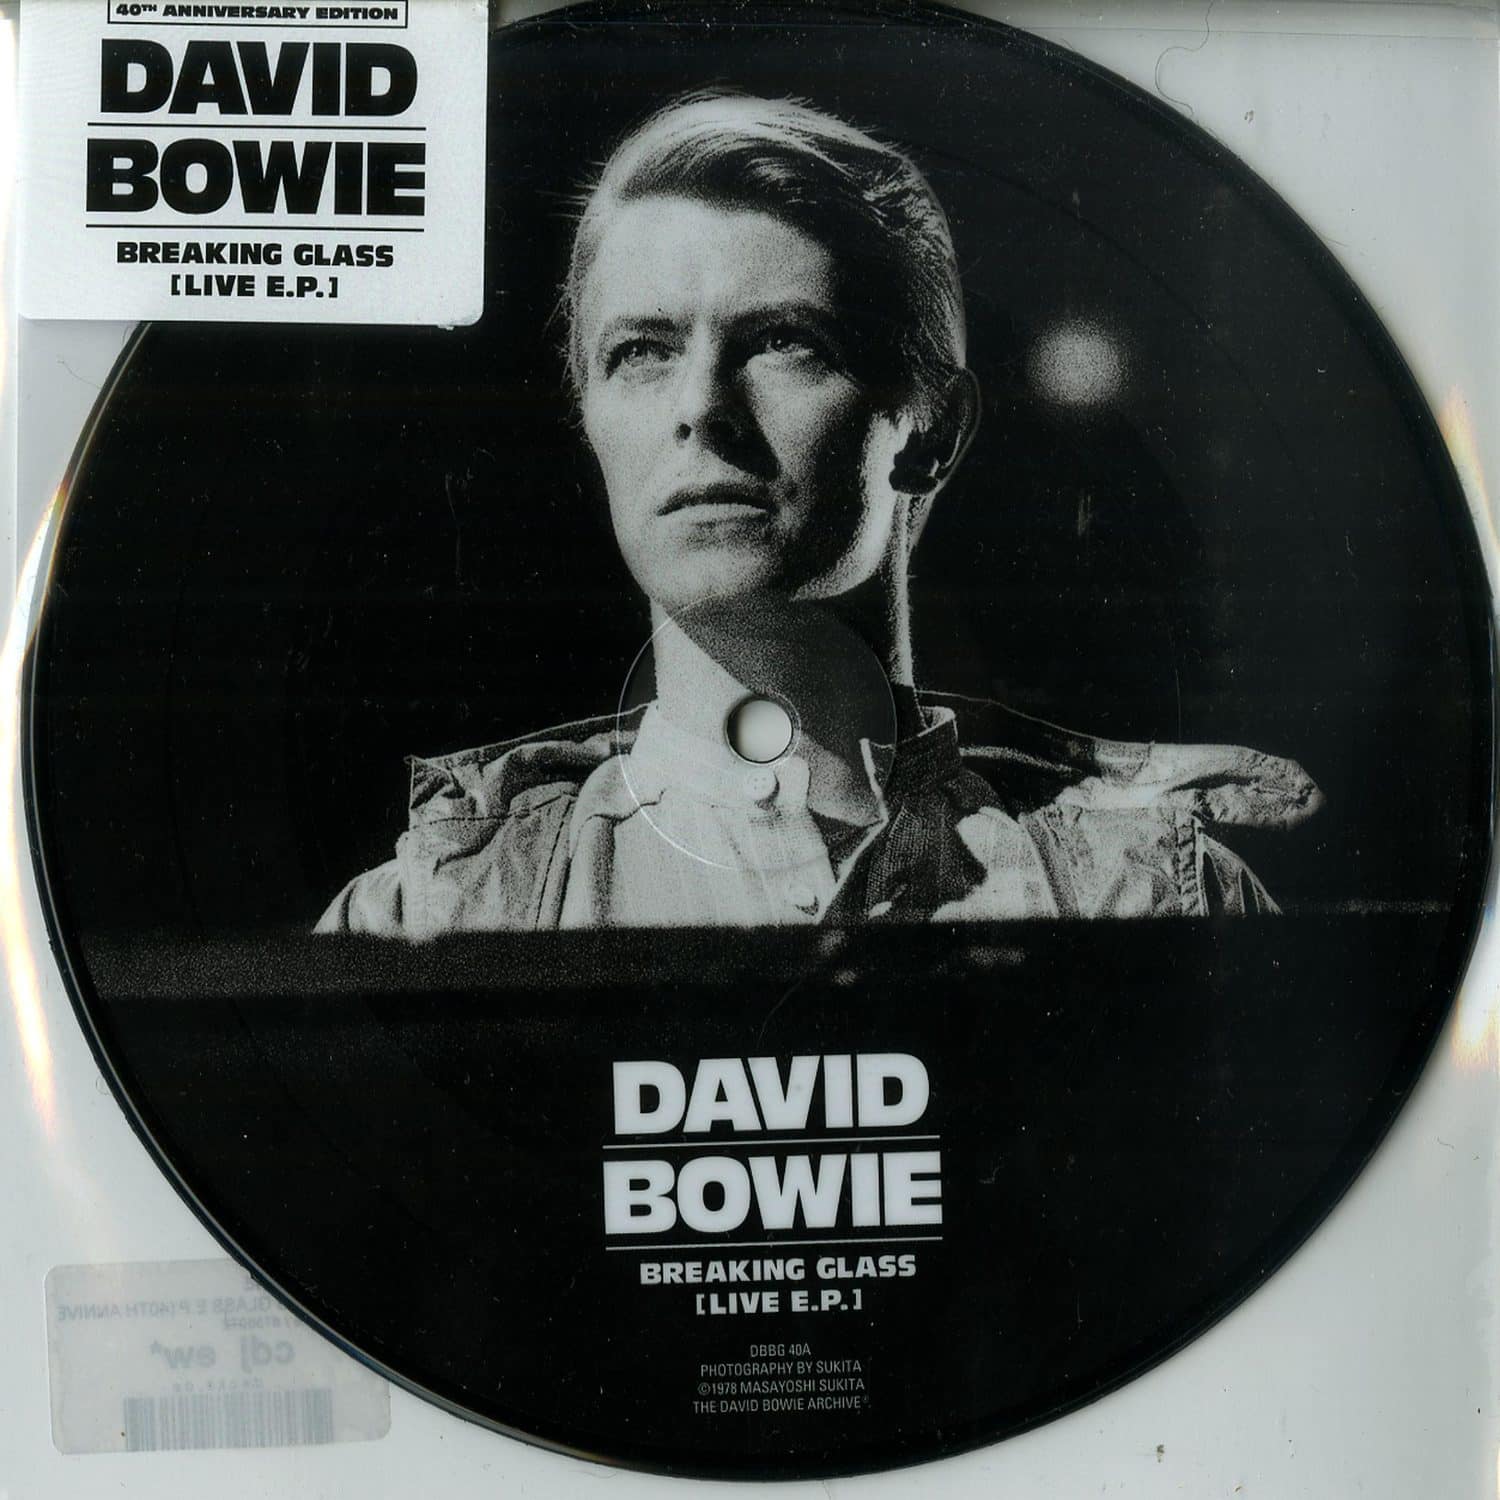 Dawid Bowie - BREAKING GLASS EP 